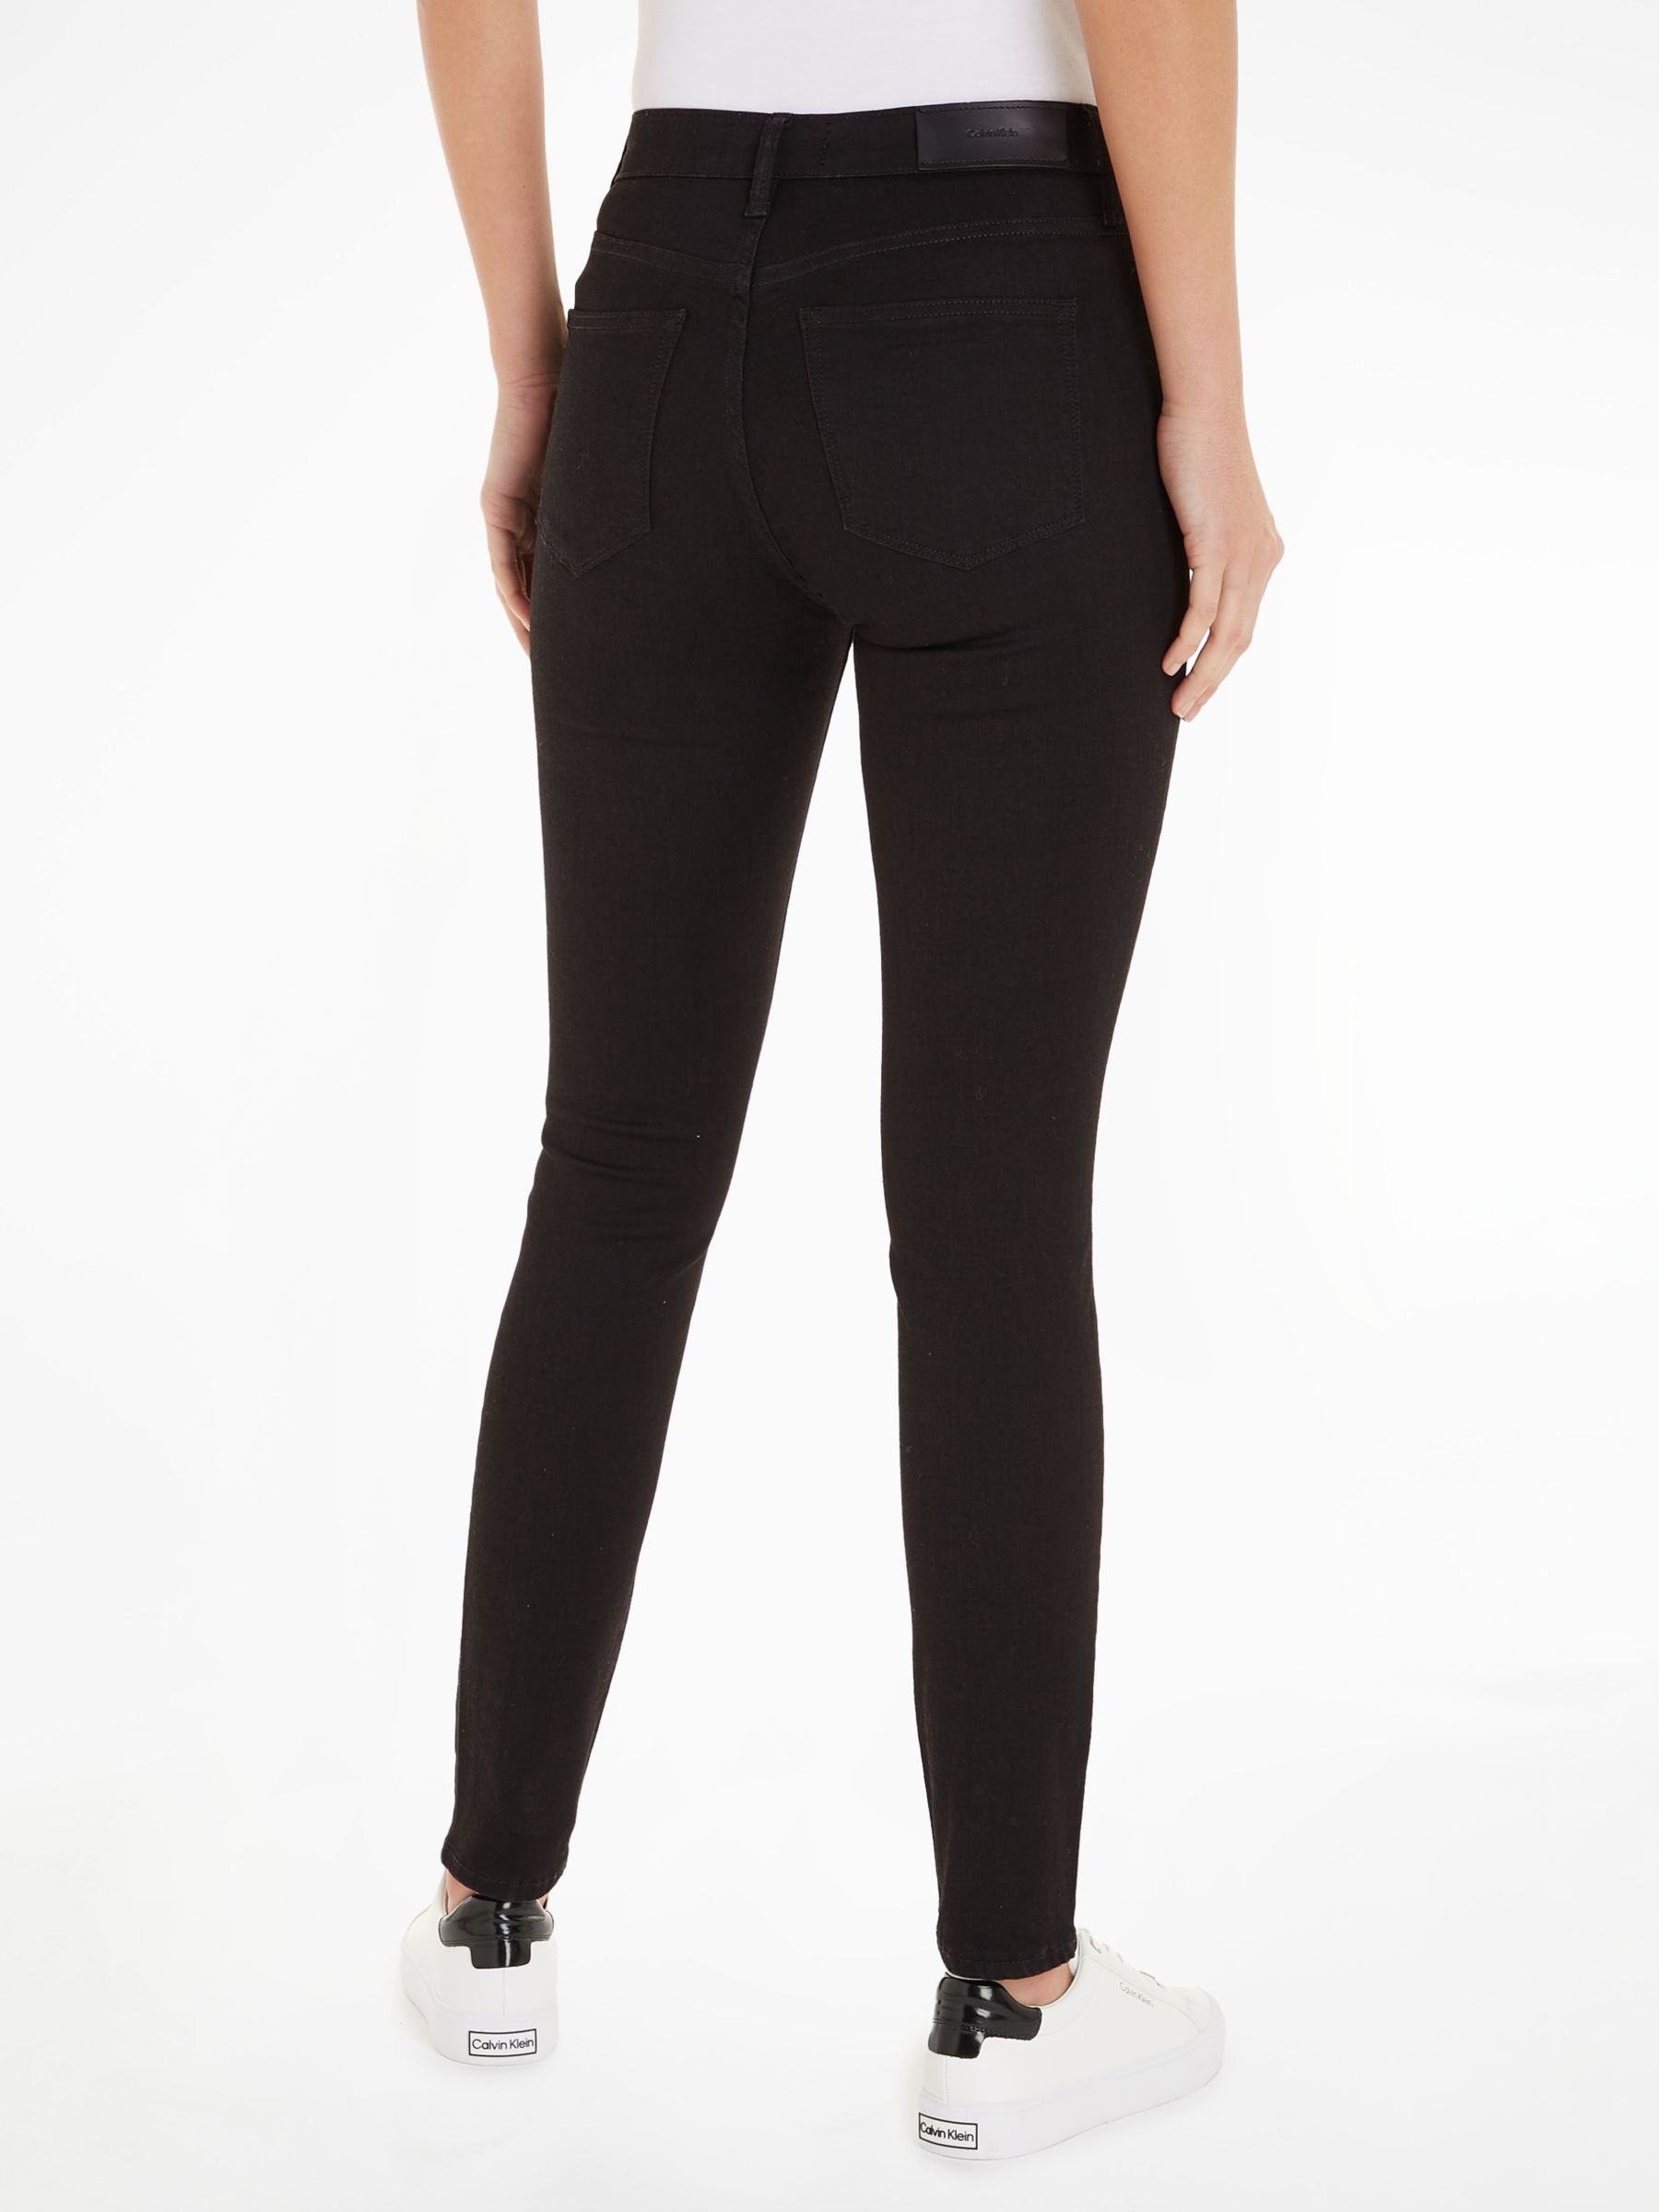 Calvin Klein High Waist Skinny Jeans, Denim Black, 25R